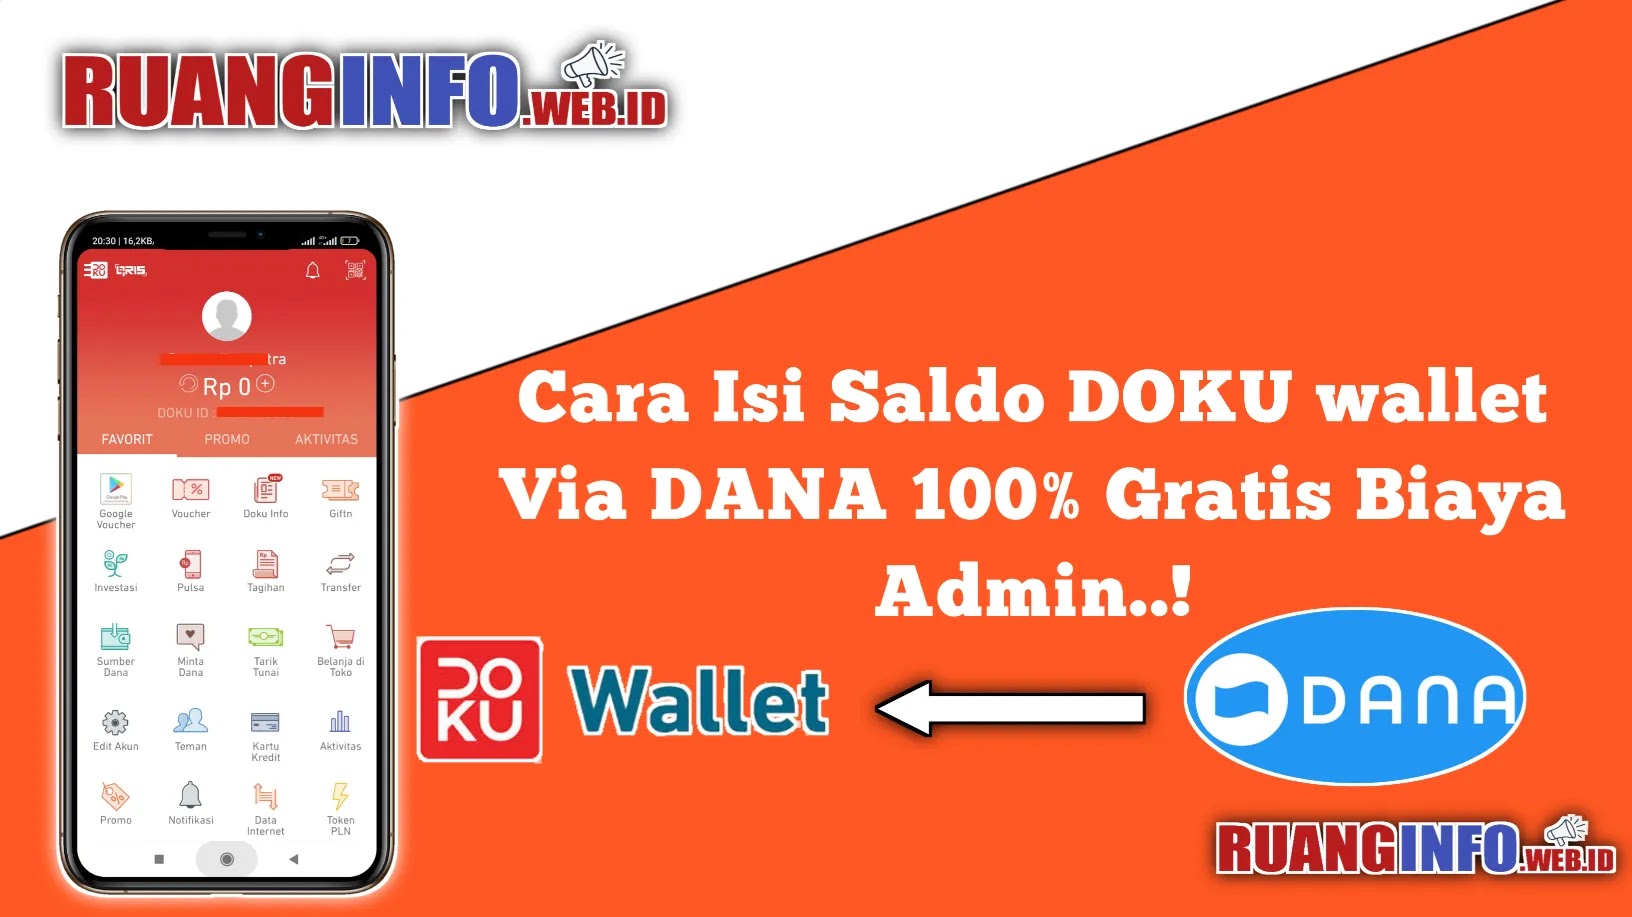 Cara Isi Saldo Doku wallet Via Dana 100% Gratis Biaya Admin!